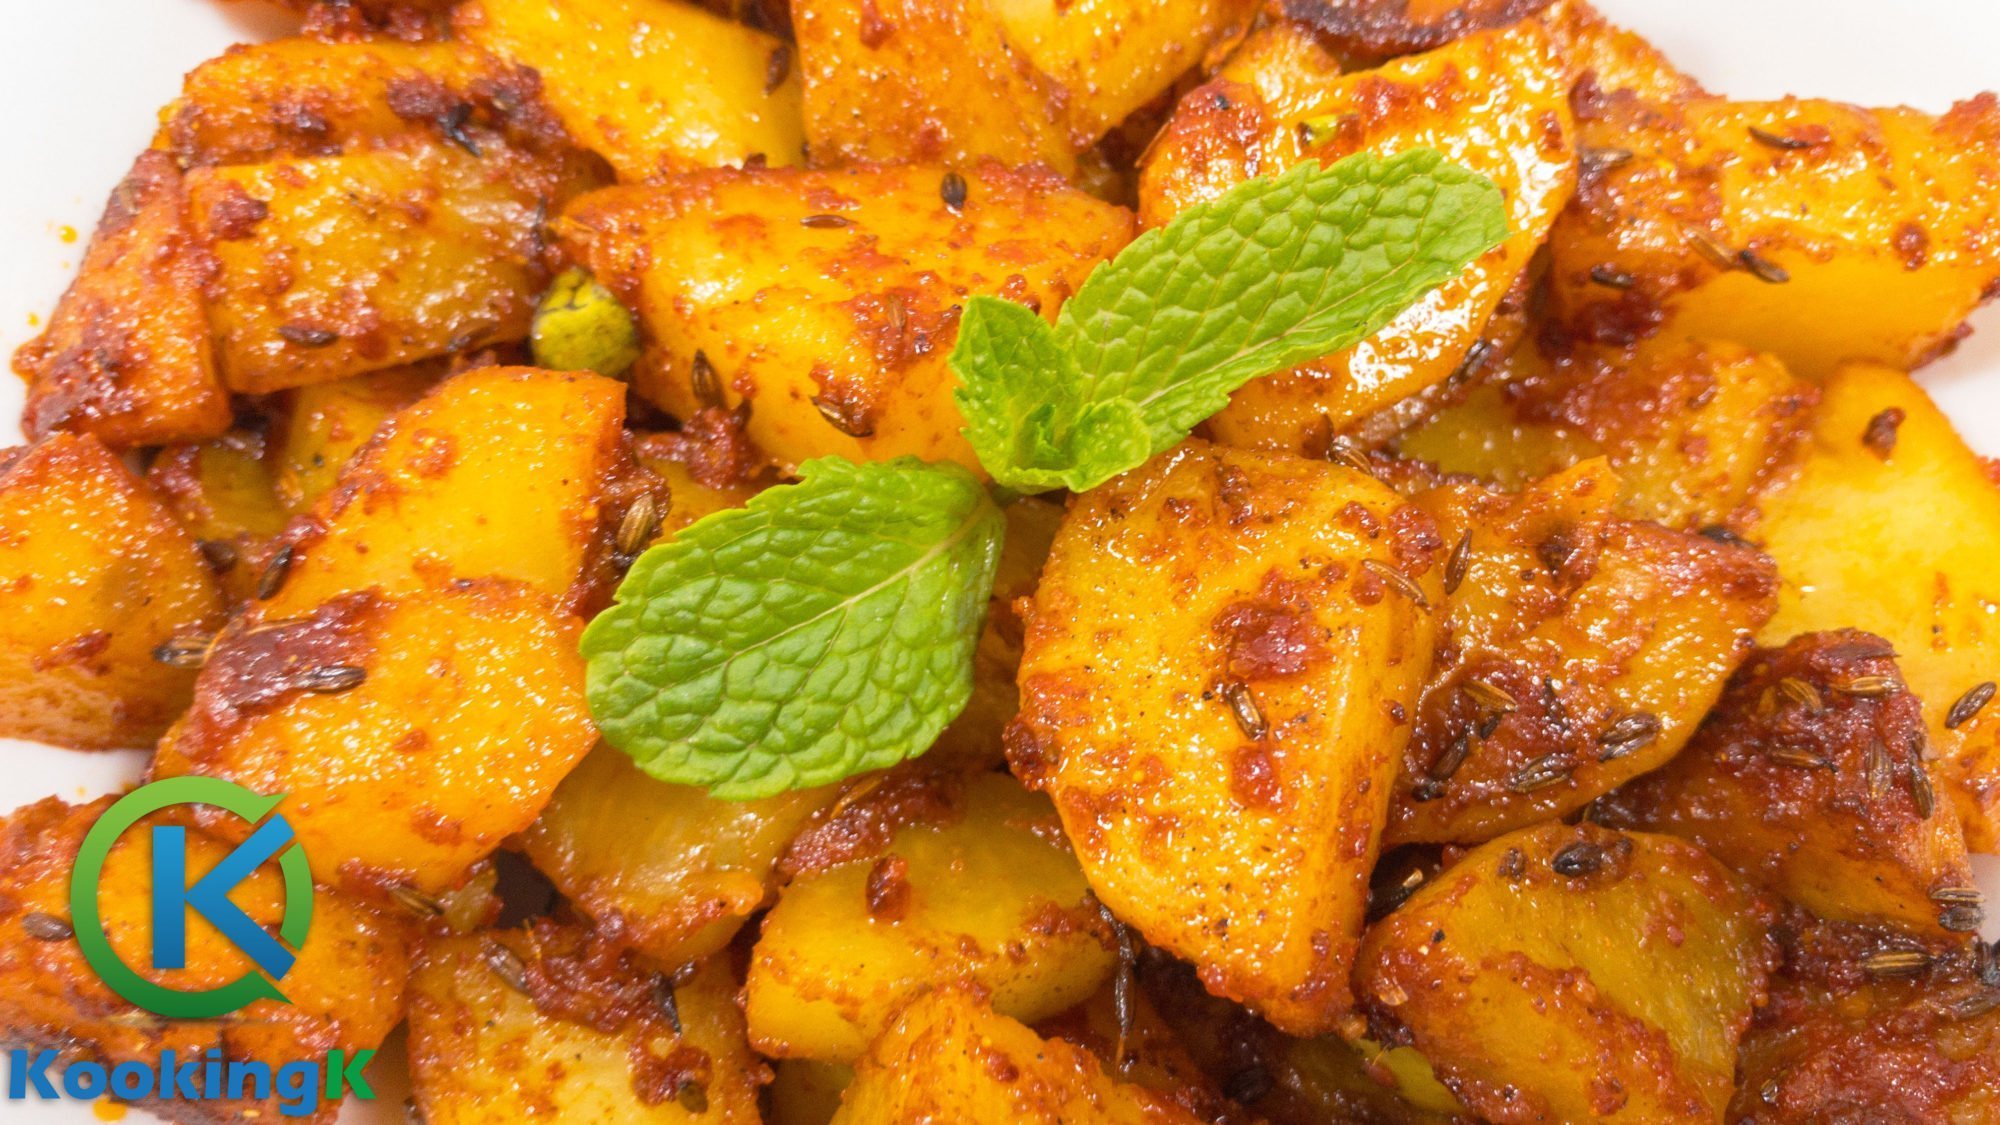 Jhat Pat Spicy Aloo Fry - Spicy Potato Recipe by KooKingK